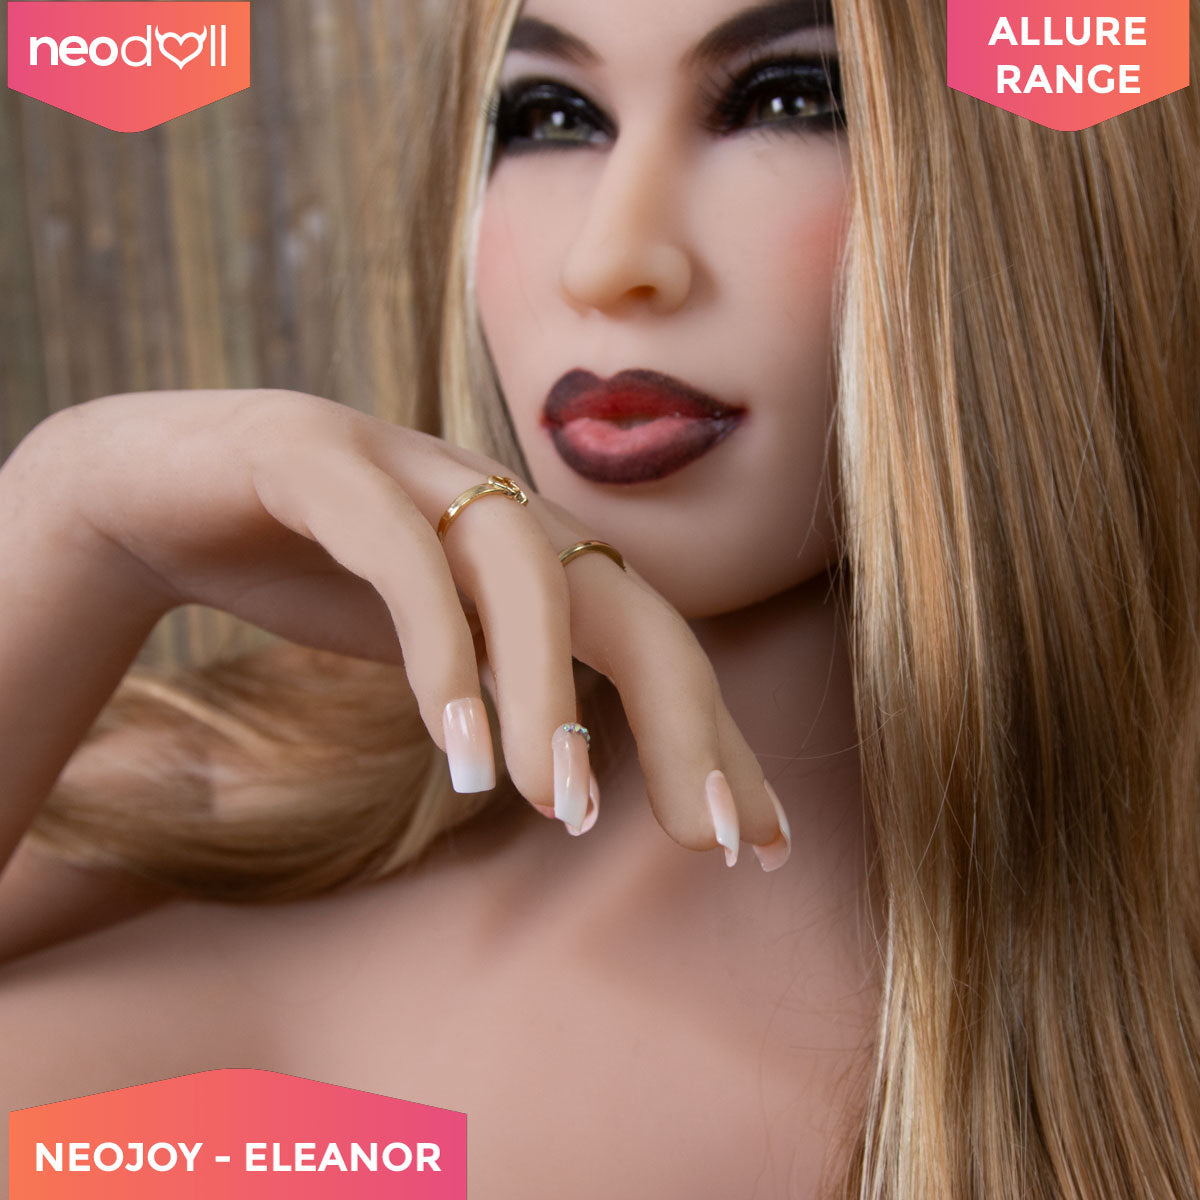 Neodoll Allure Eleanor Sex Doll Torso With Hands - Tan